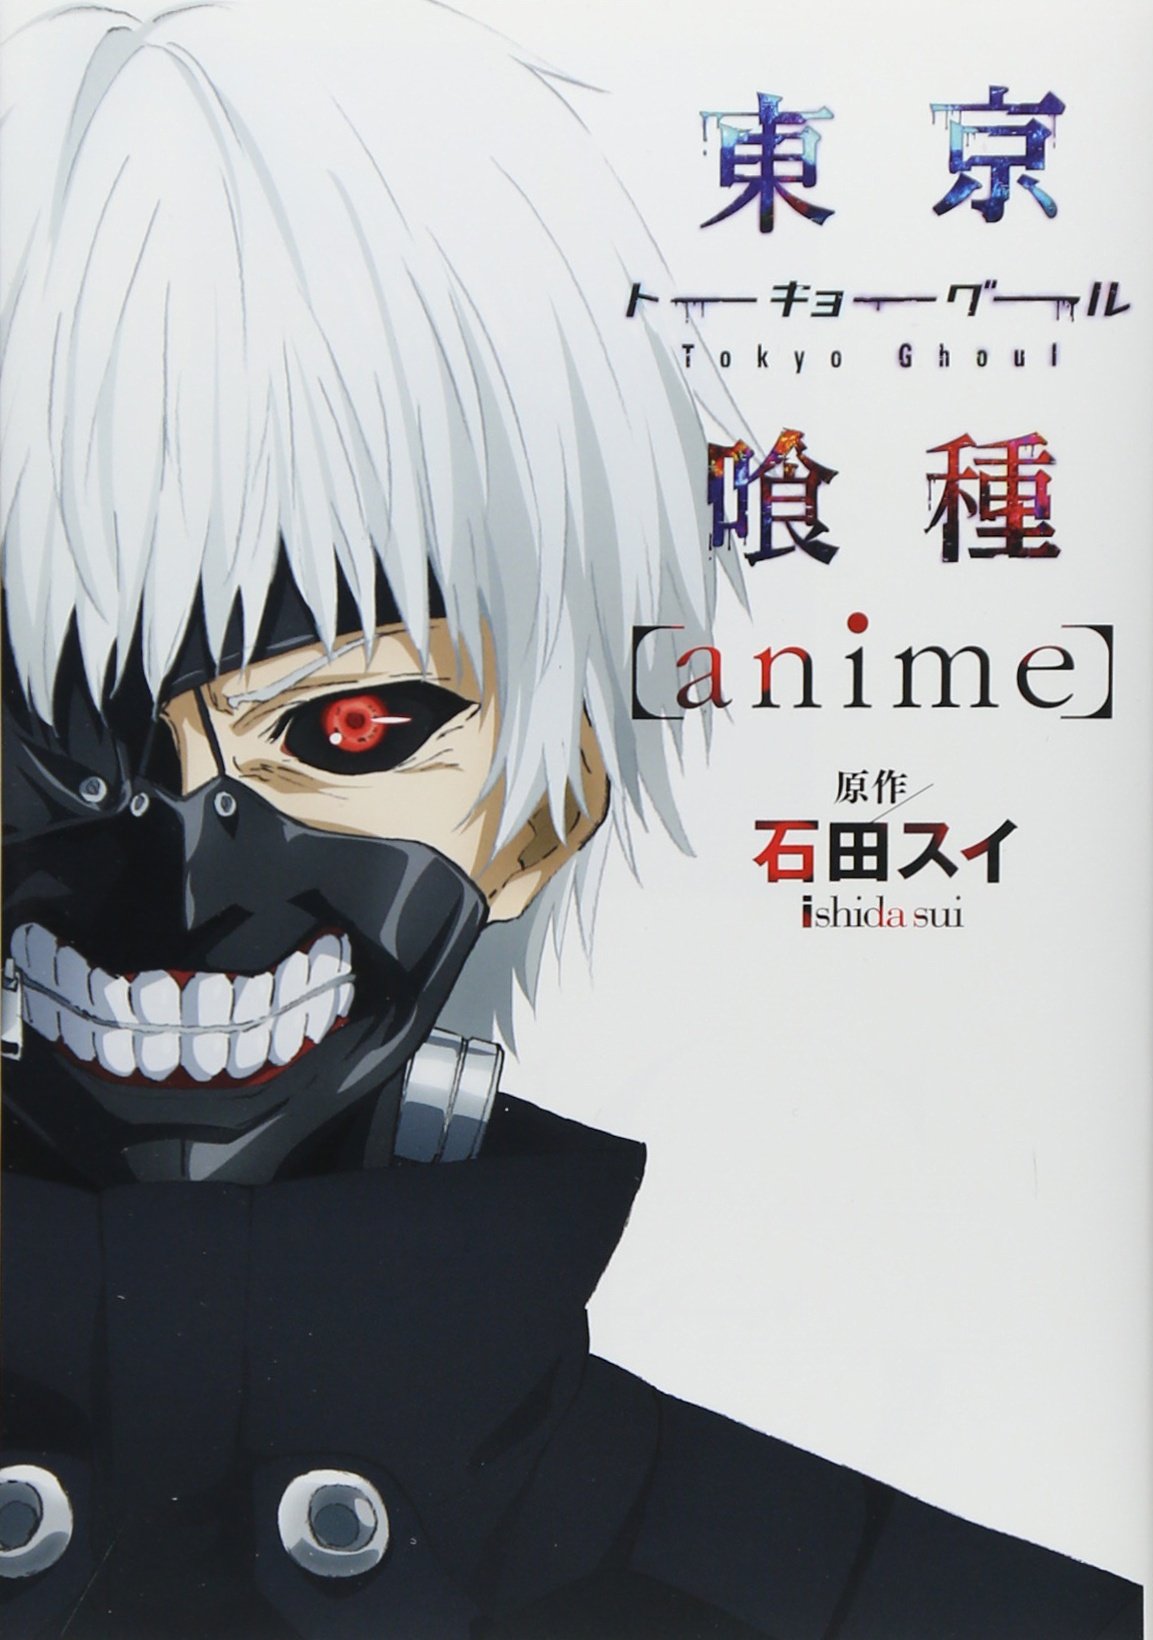 Tokyo Ghoul anime anime book  Tokyo Ghoul Wiki  Fandom